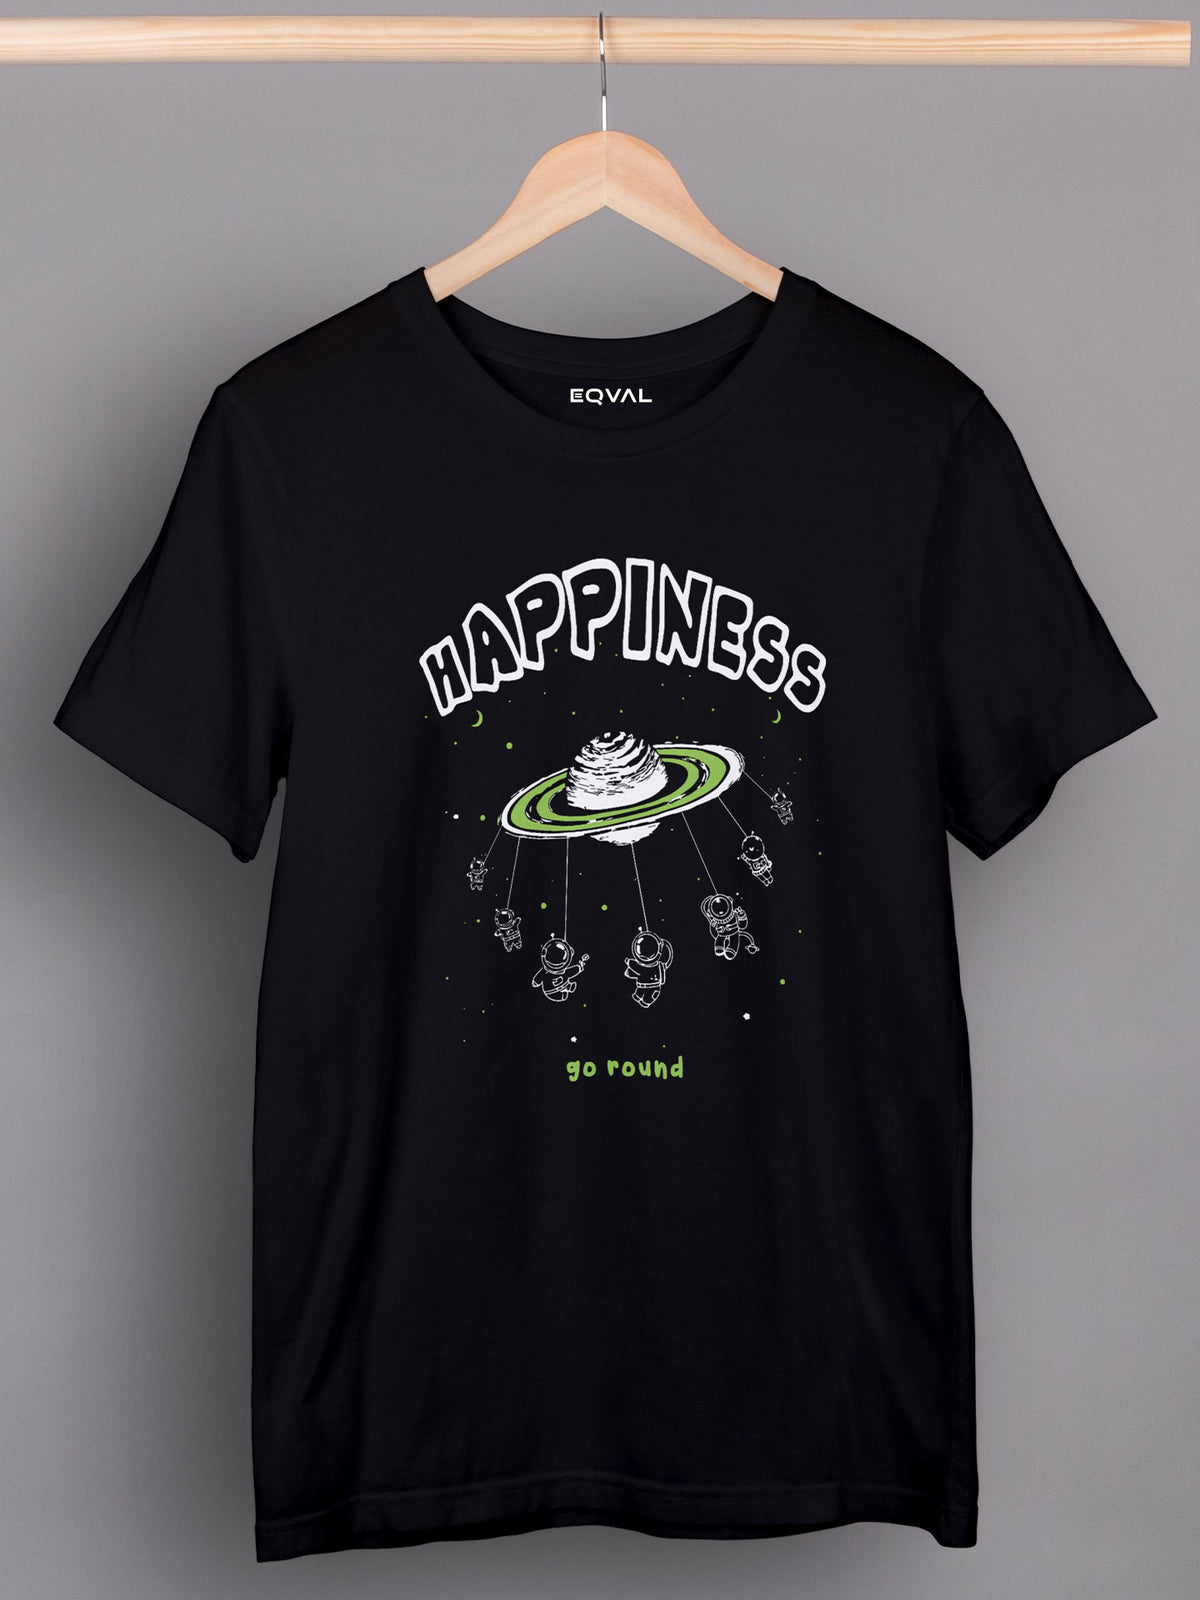 Men's Black Happiness Printed T-shirt